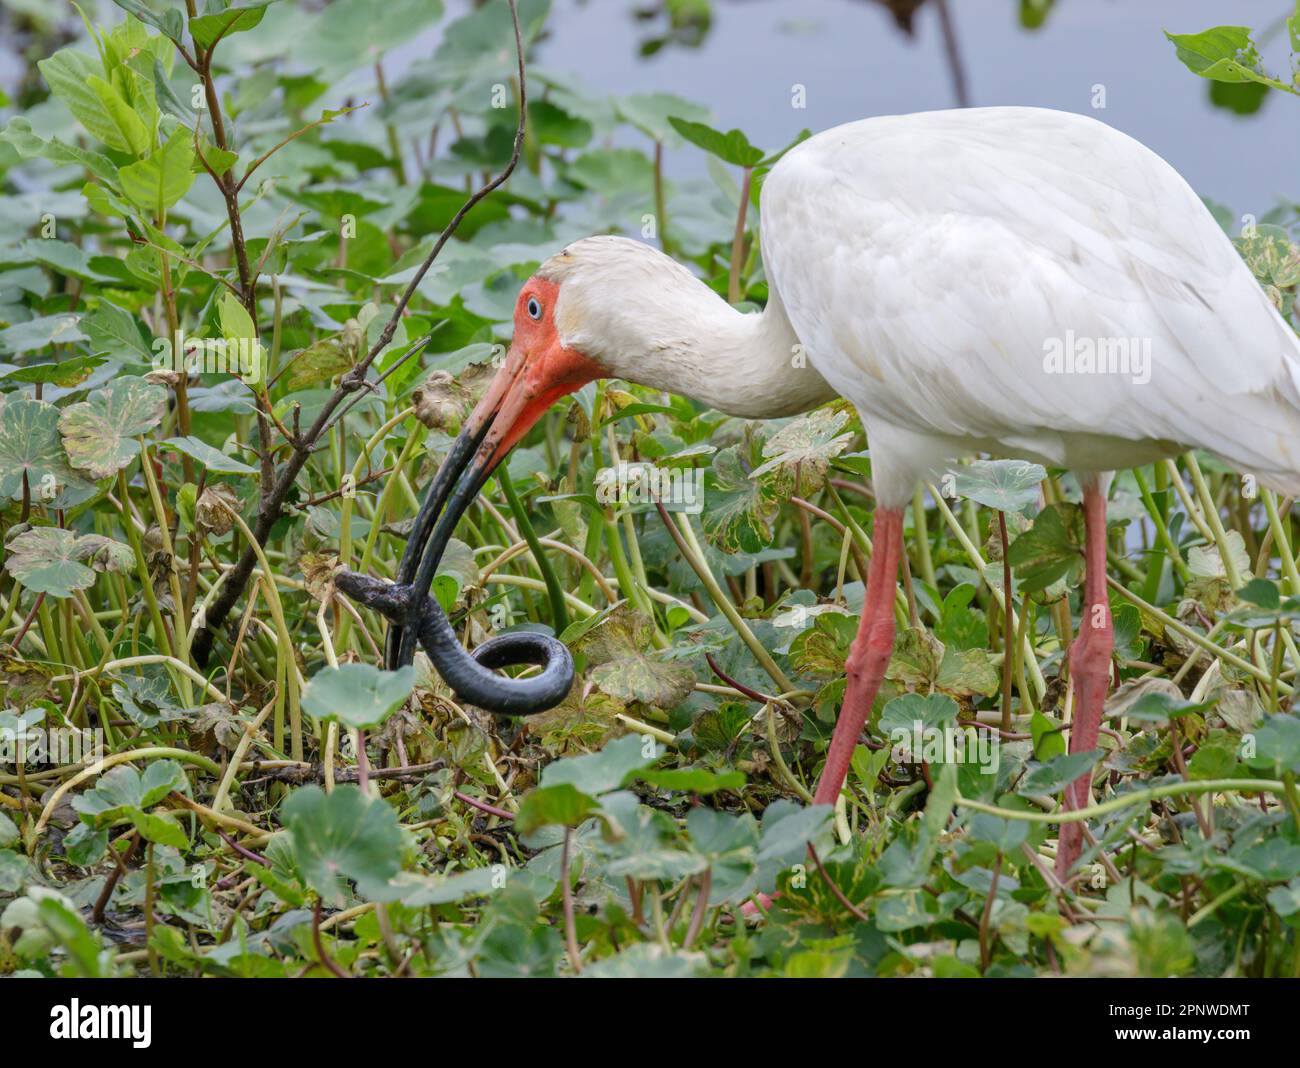 American white ibis (Eudocimus albus) caught a lesser siren (Siren intermedia) in a swamp, Brazos Bend State Park, Needville, Texas, USA. Stock Photo